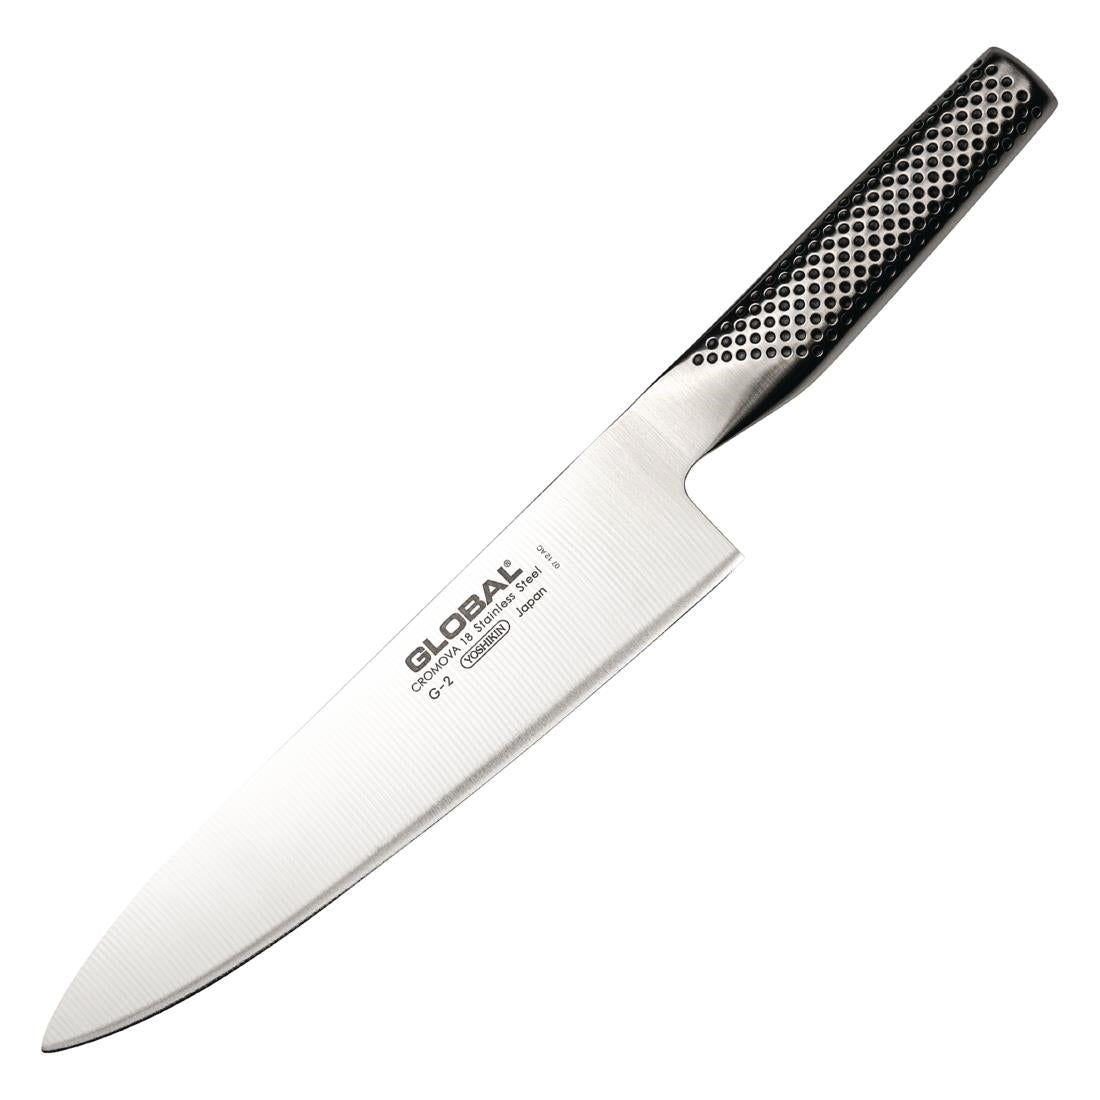 DG016 Global Classic Chefs Knife 20cm With Knife Sharpener JD Catering Equipment Solutions Ltd